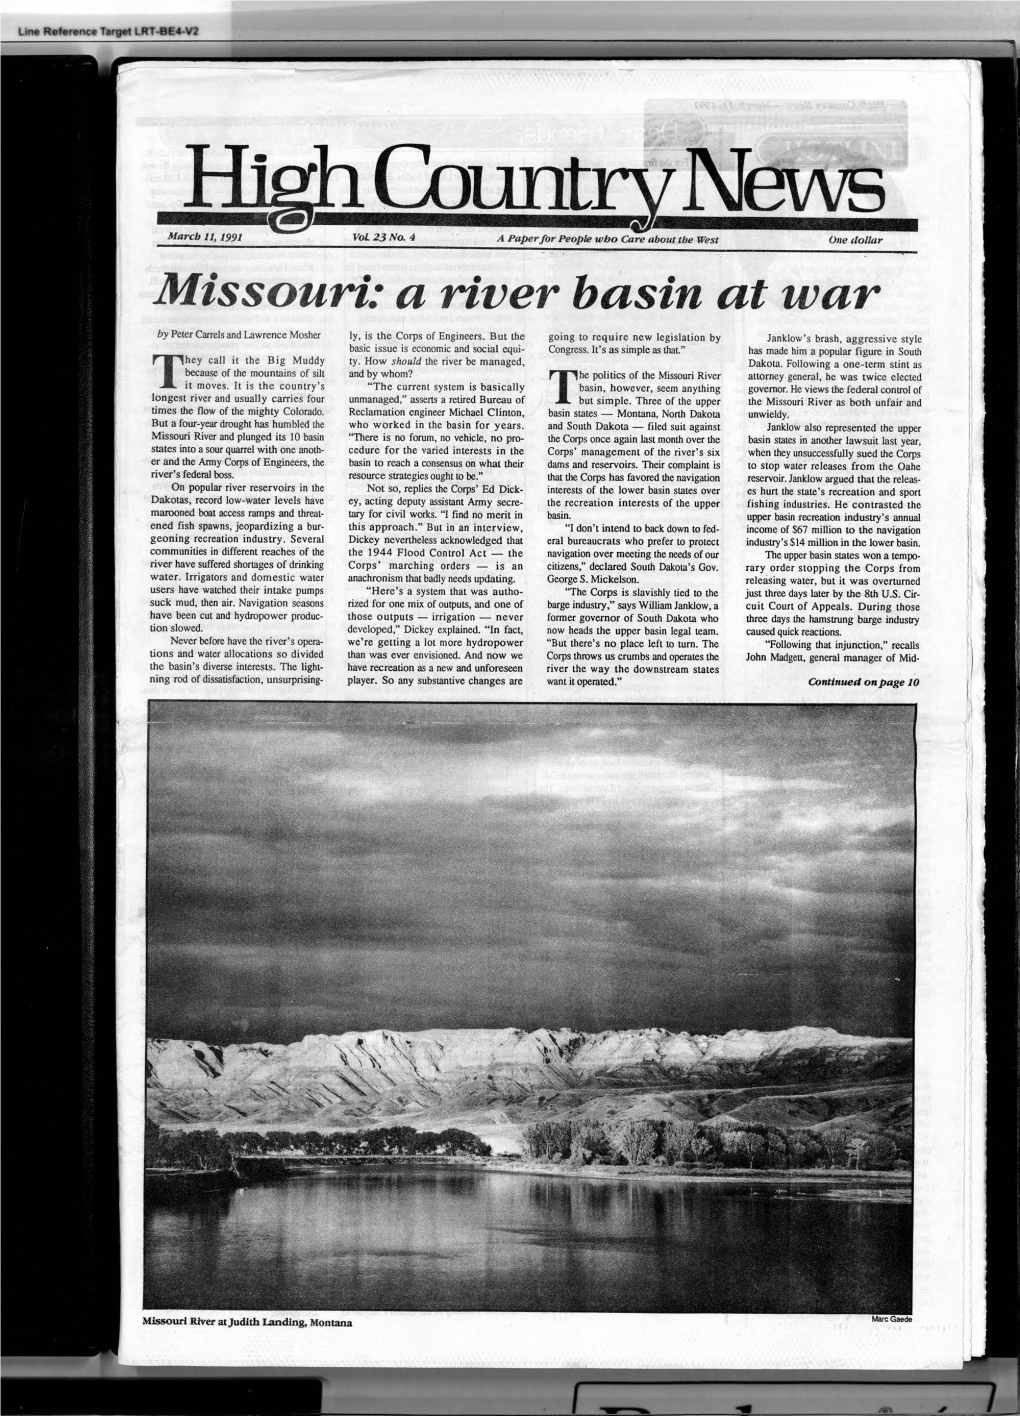 High Country News Vol. 23.4, Mar. 11, 1991